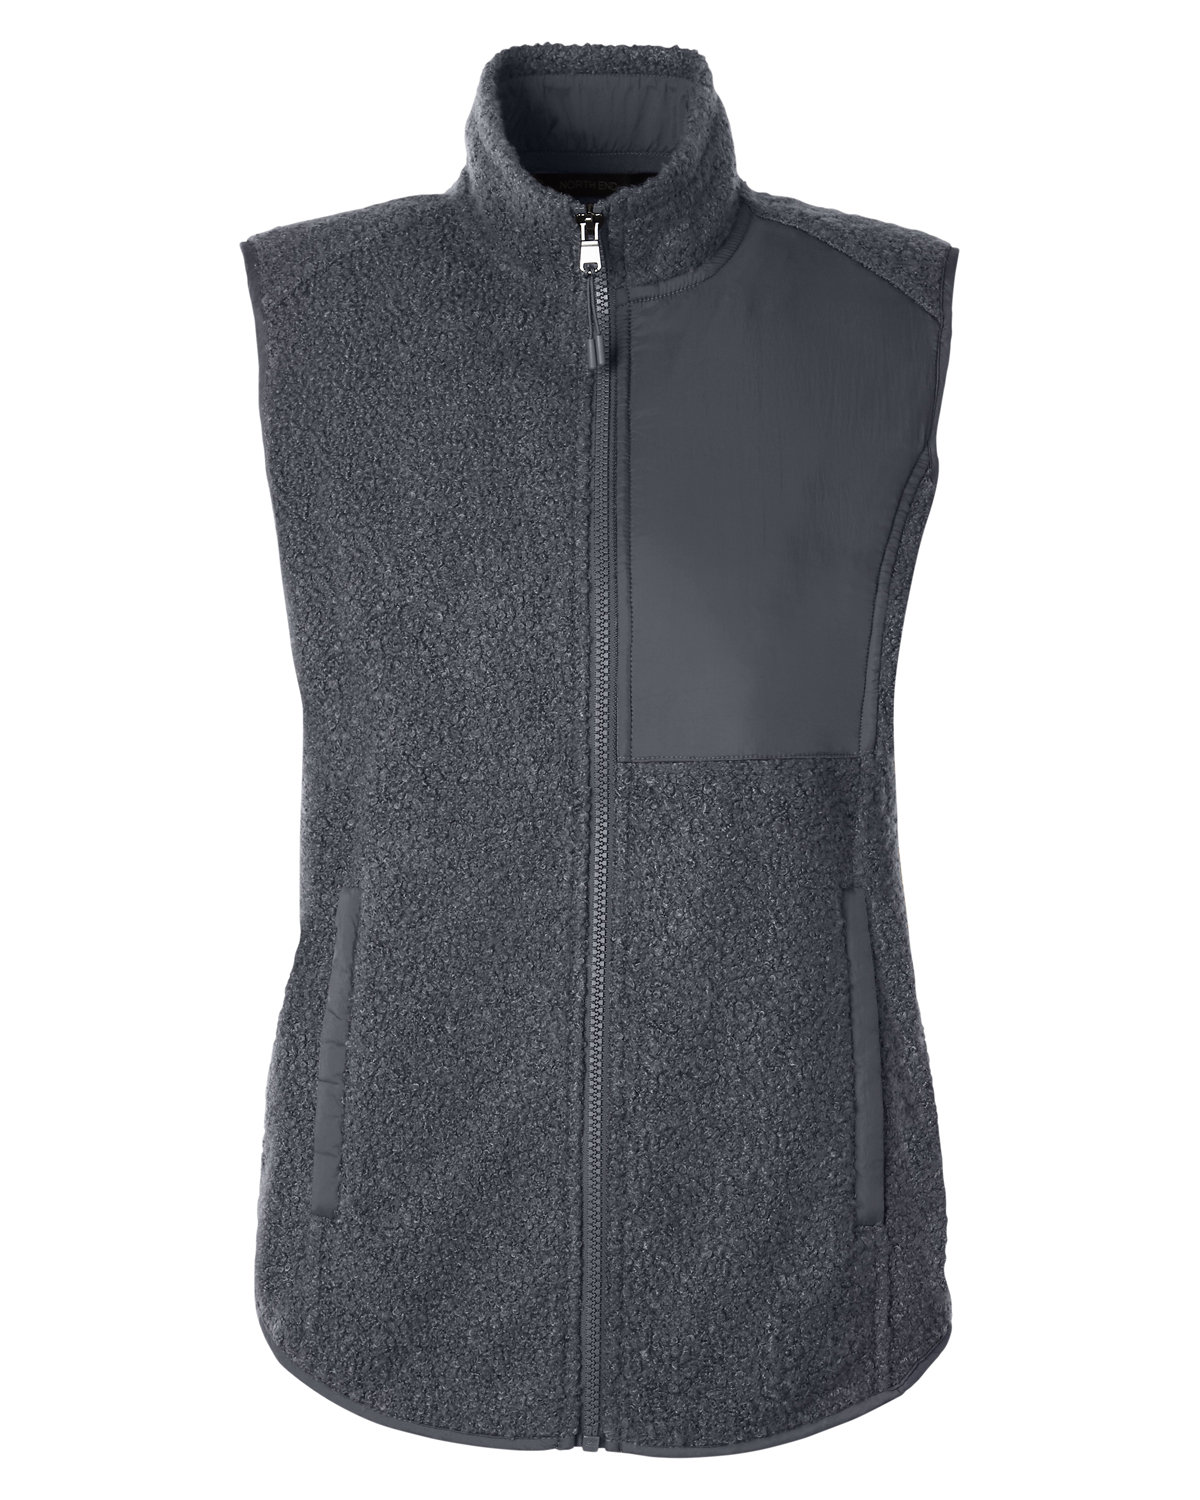 North End NE714W - Ladies' Aura Sweater Fleece Vest